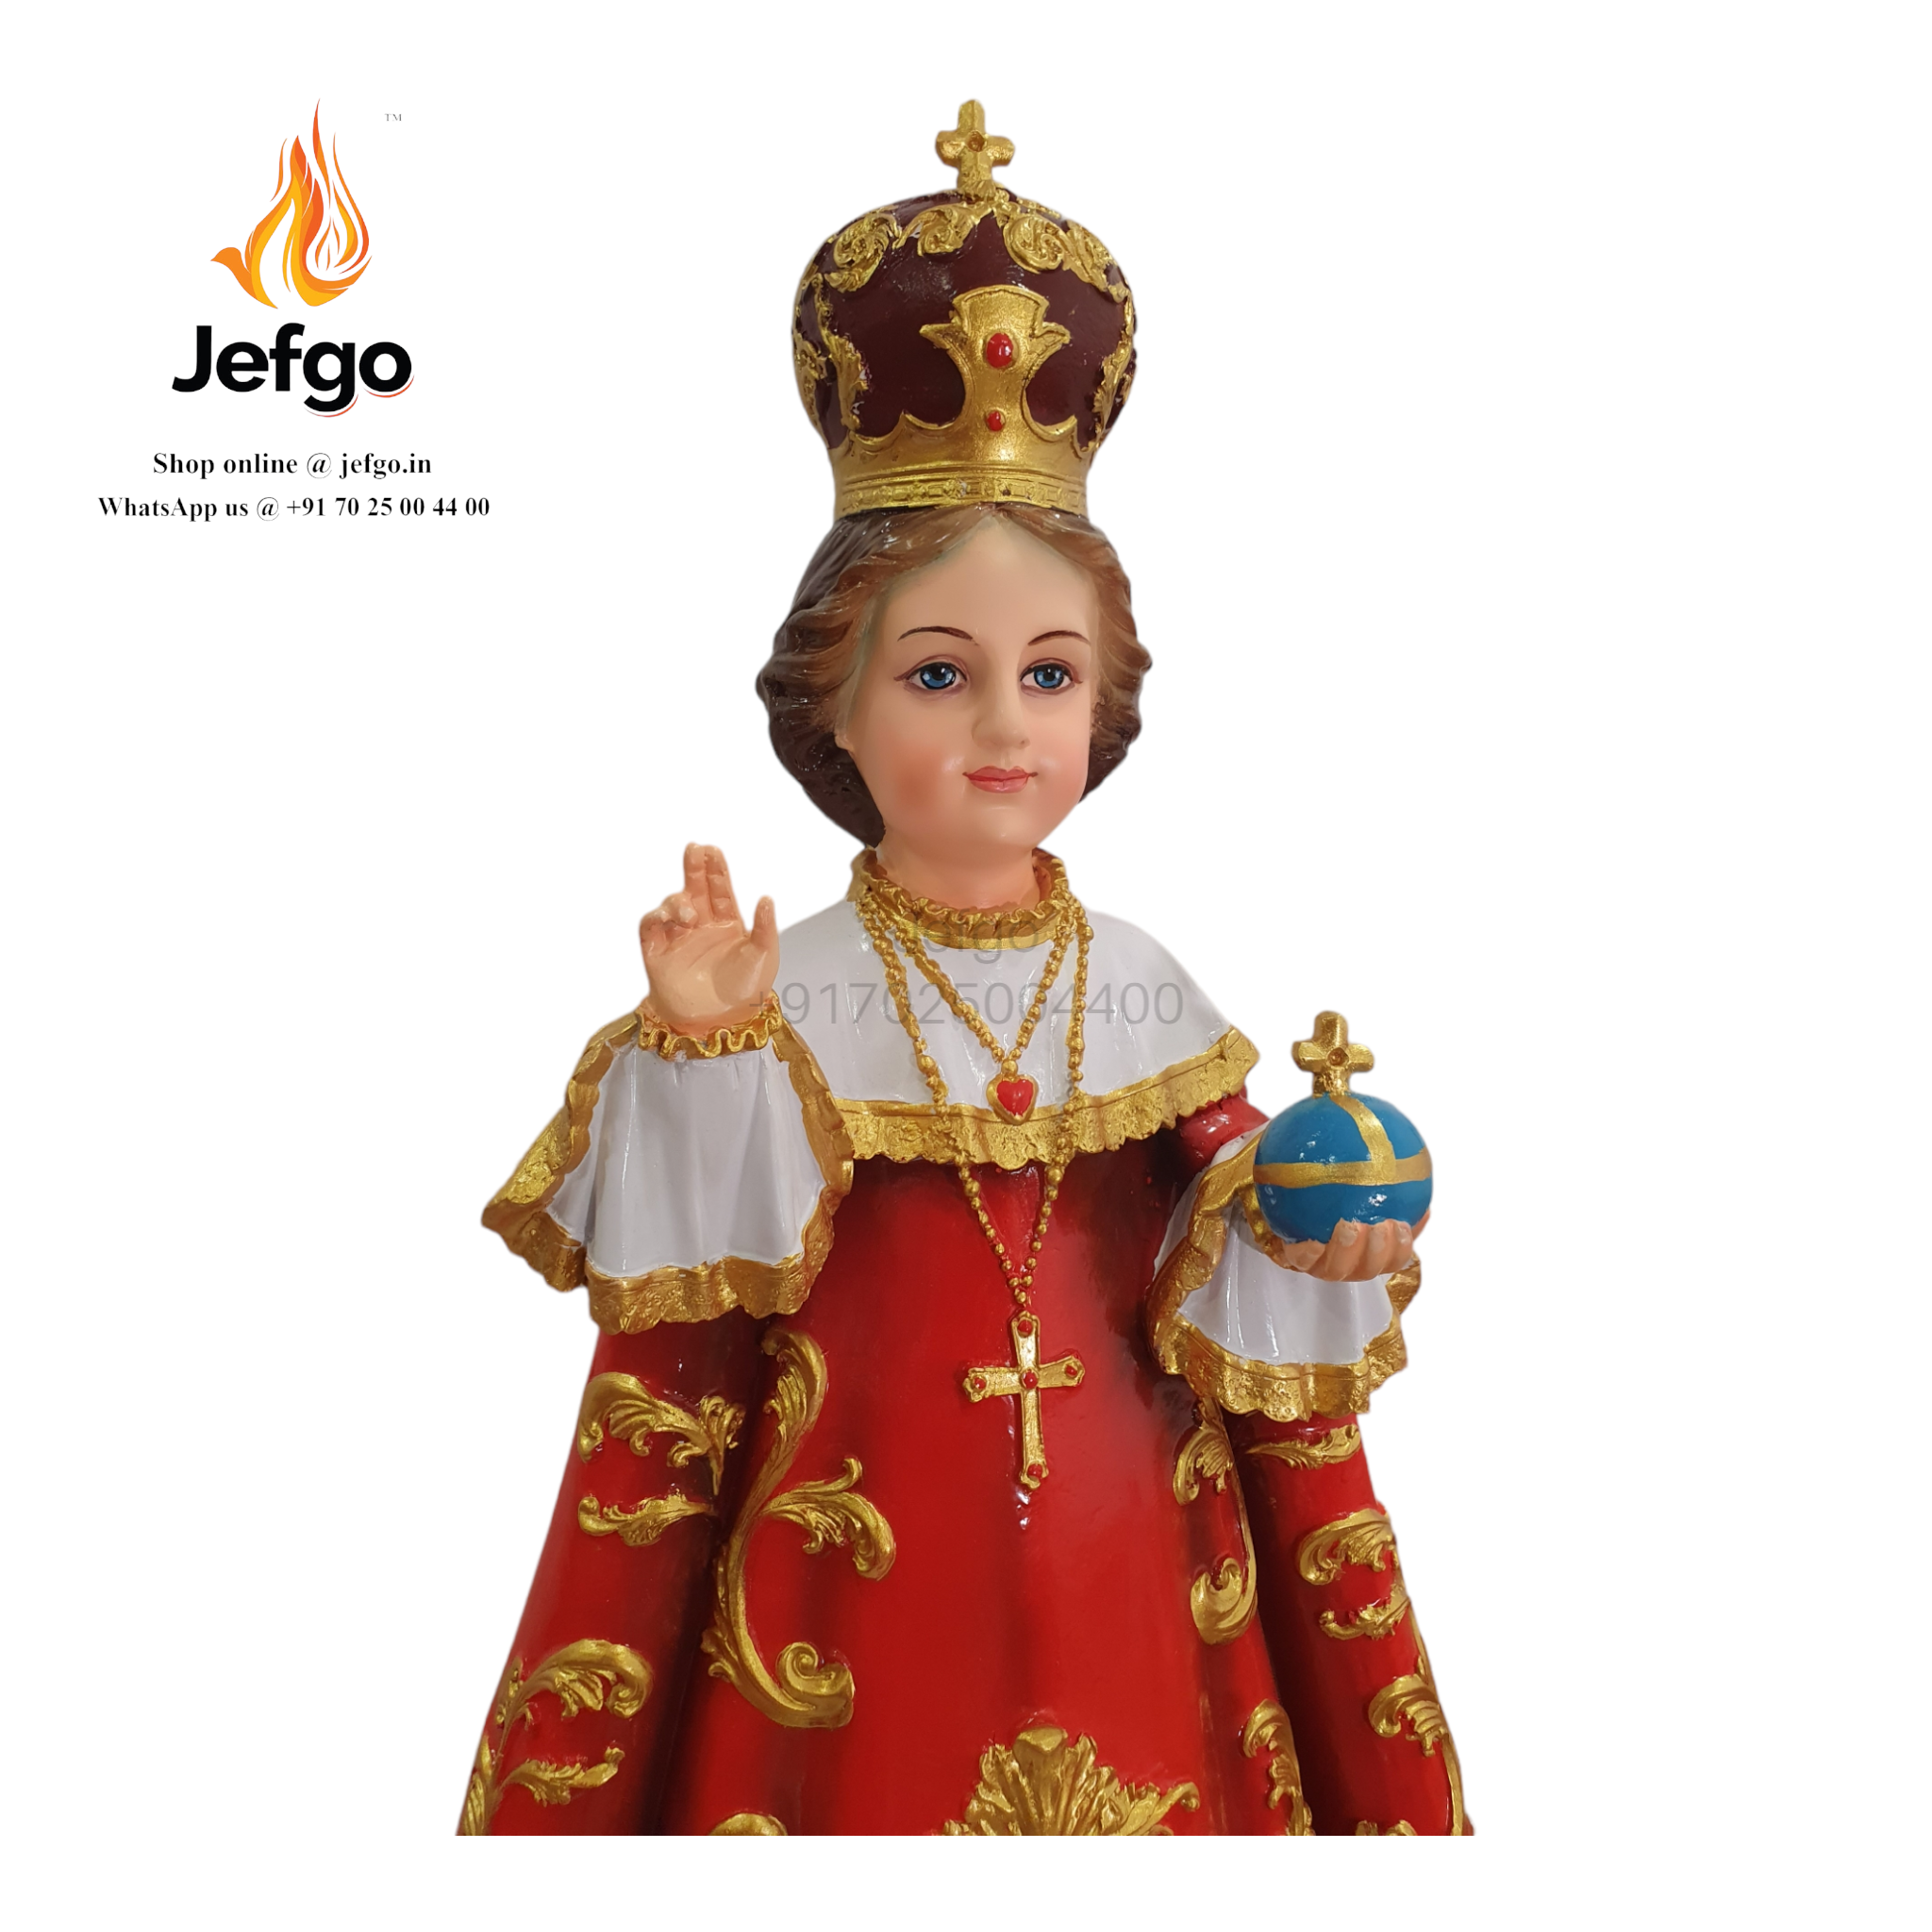 Buy Infant Jesus Statue